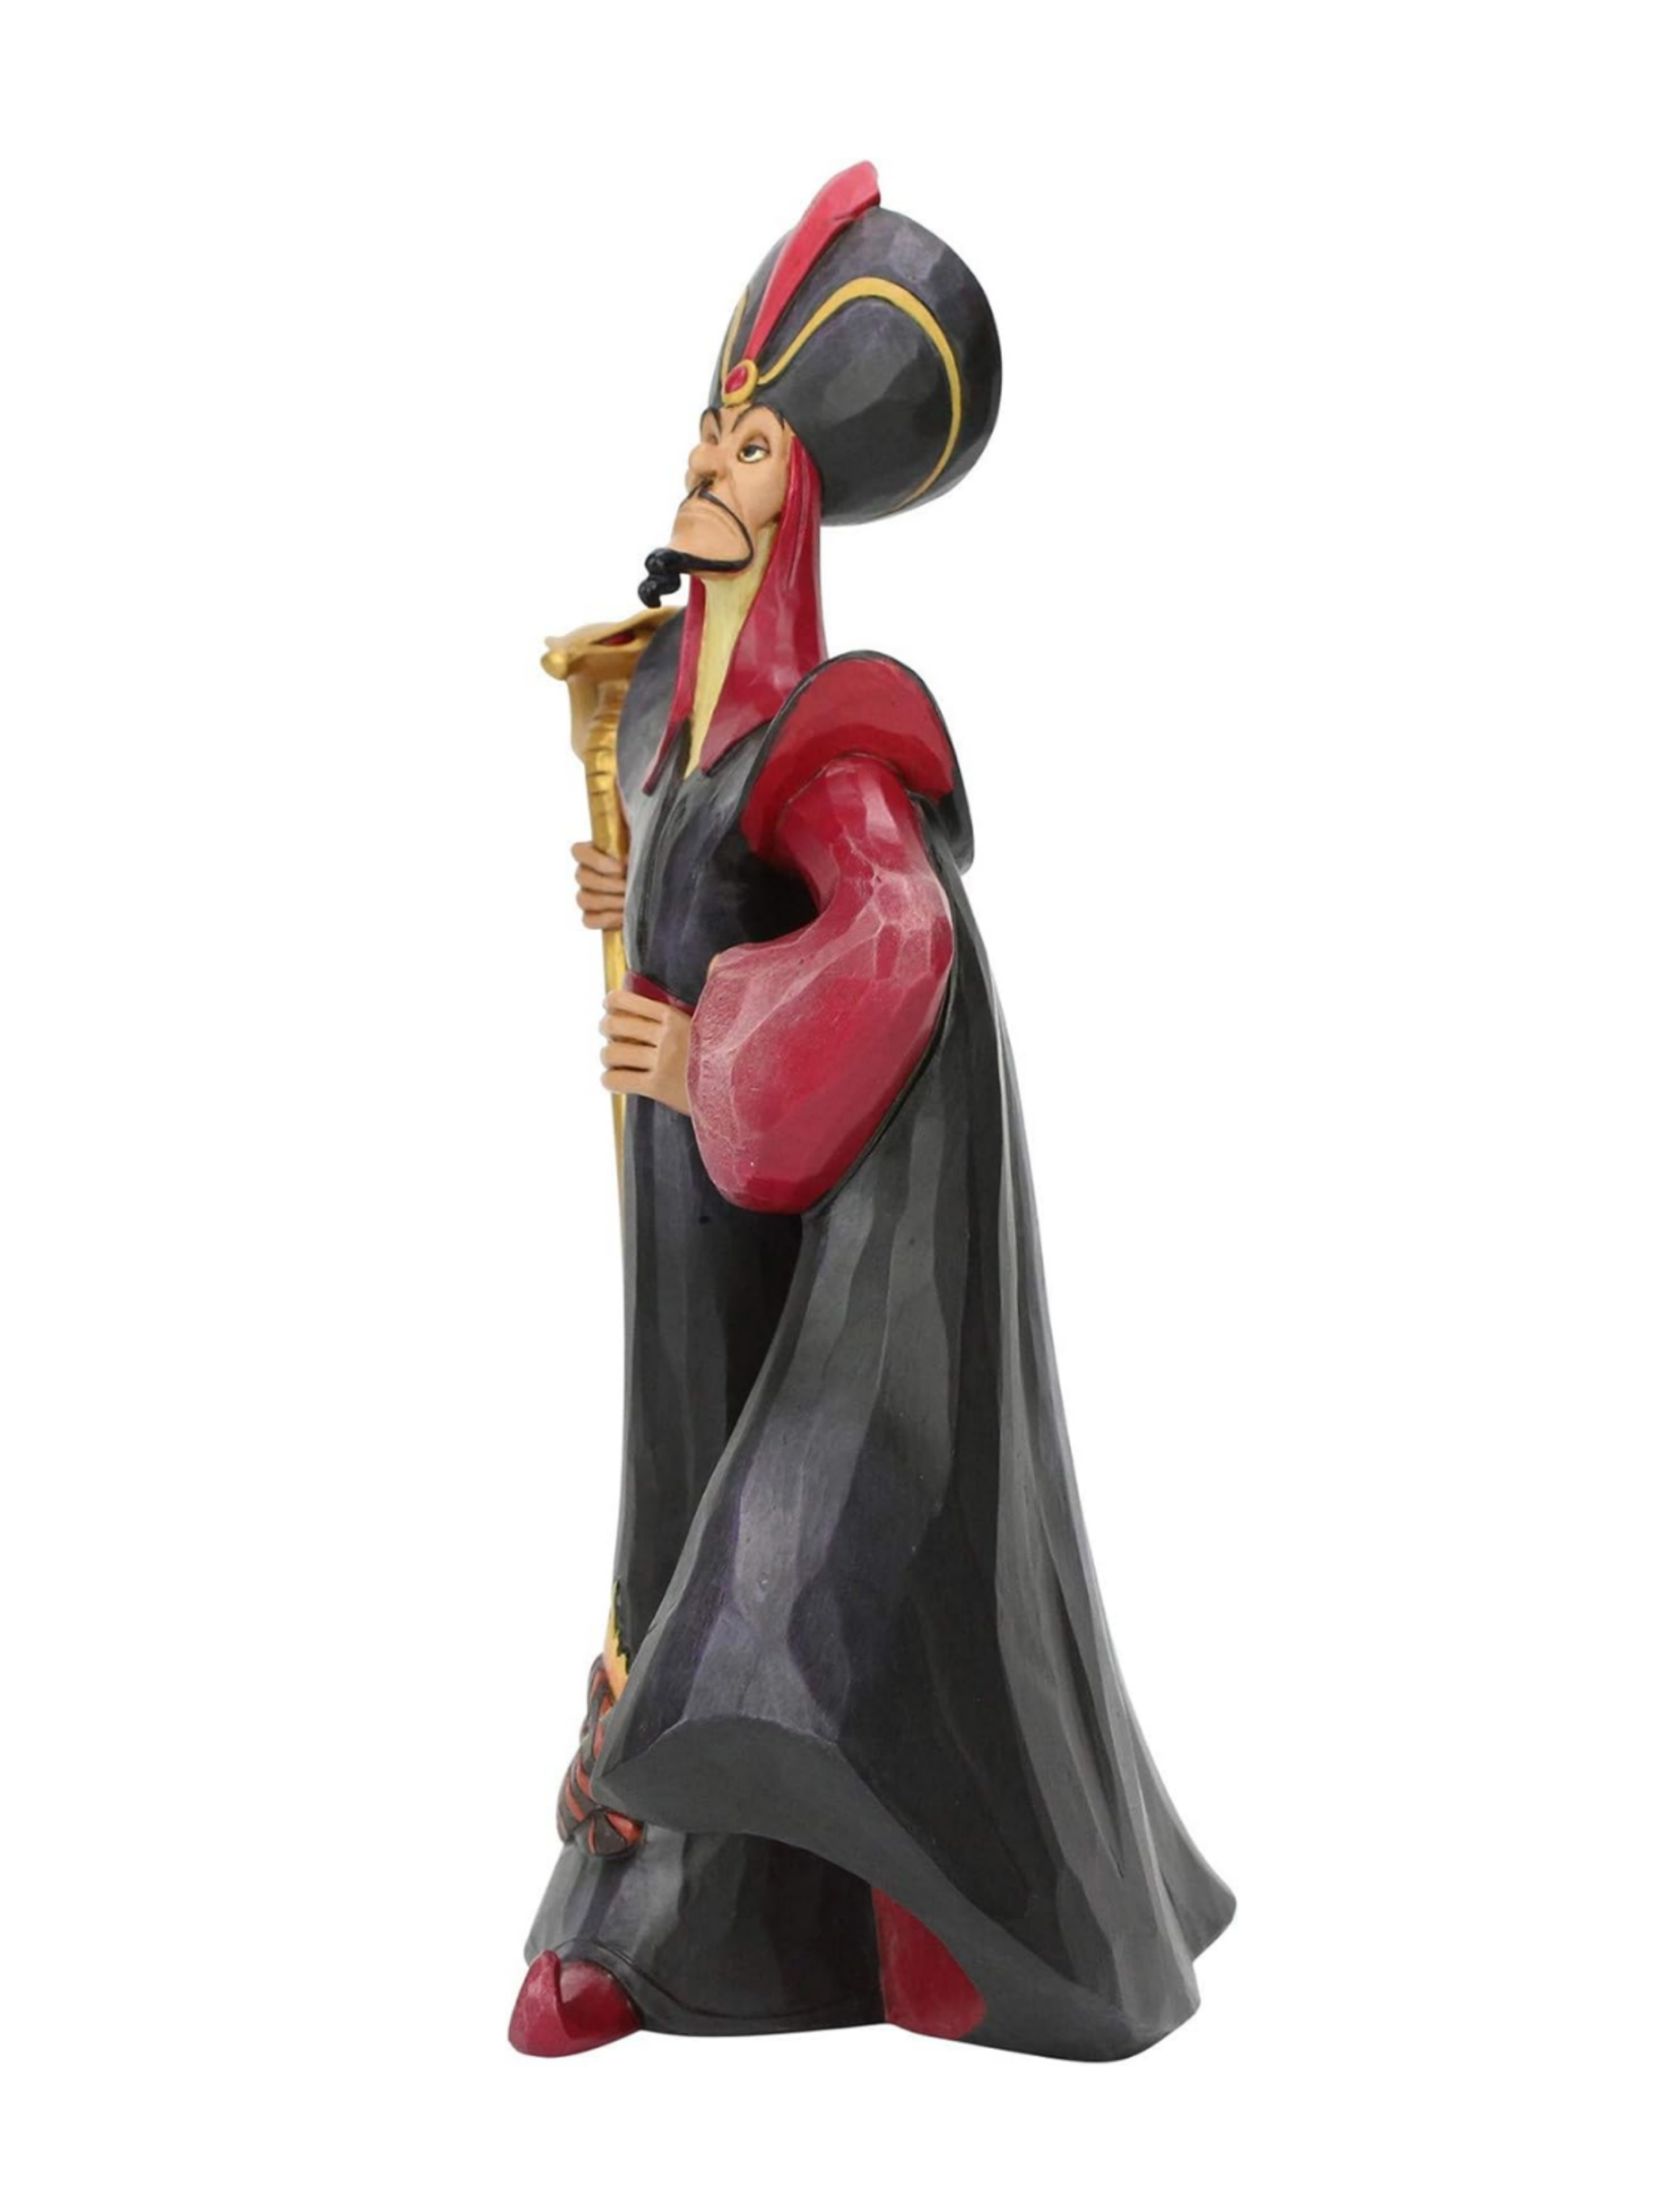 Disney Traditions "Villainous Viper" Jafar